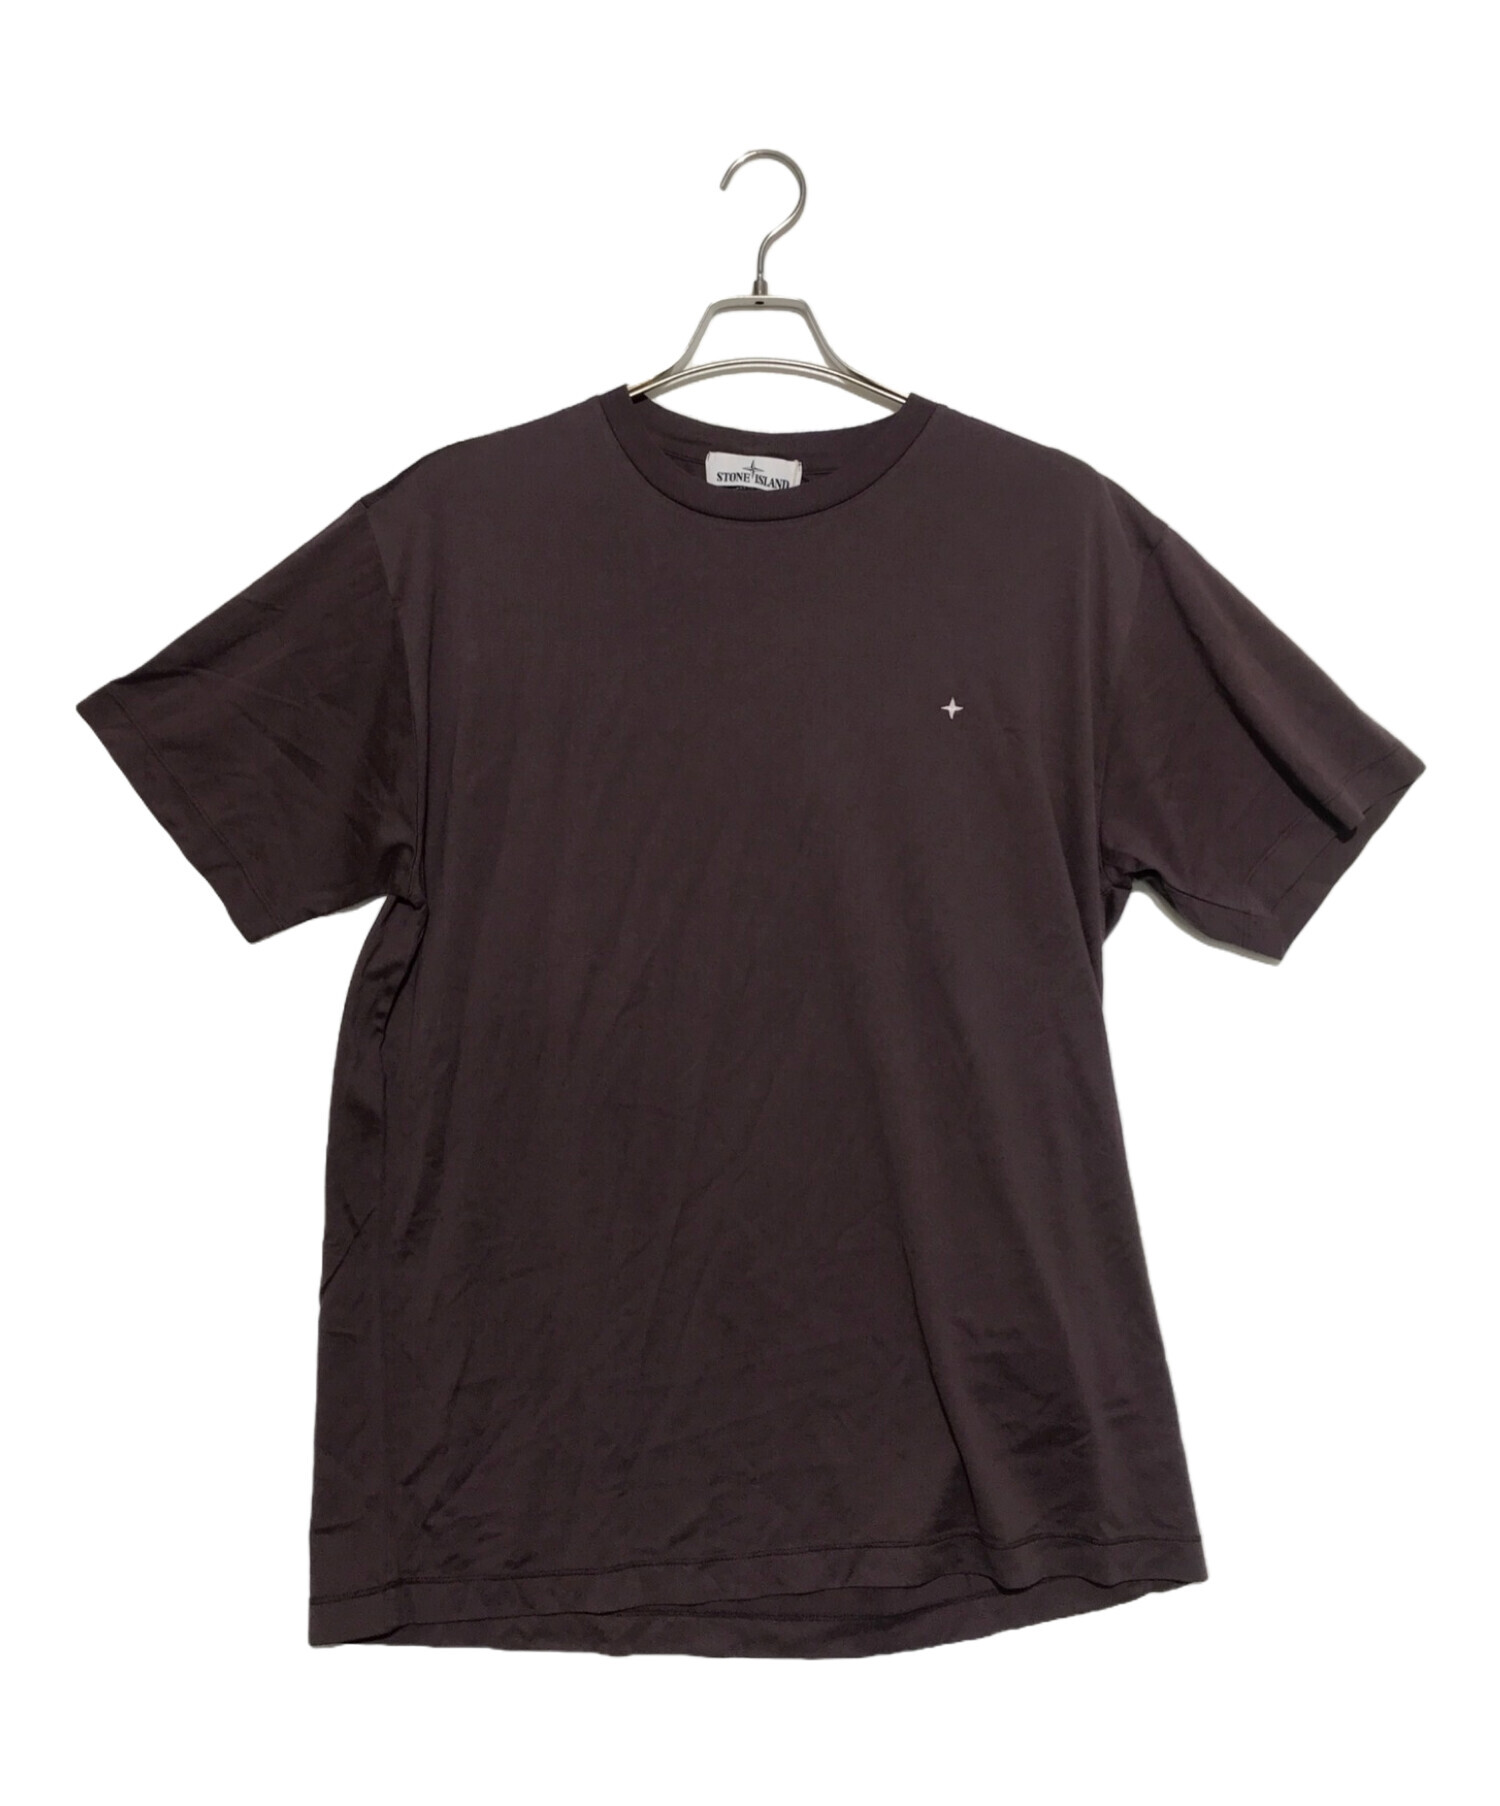 STONE ISLAND (ストーンアイランド) Cotton Jersey STAR Embroidery Short T-shirt パープル  サイズ:XL